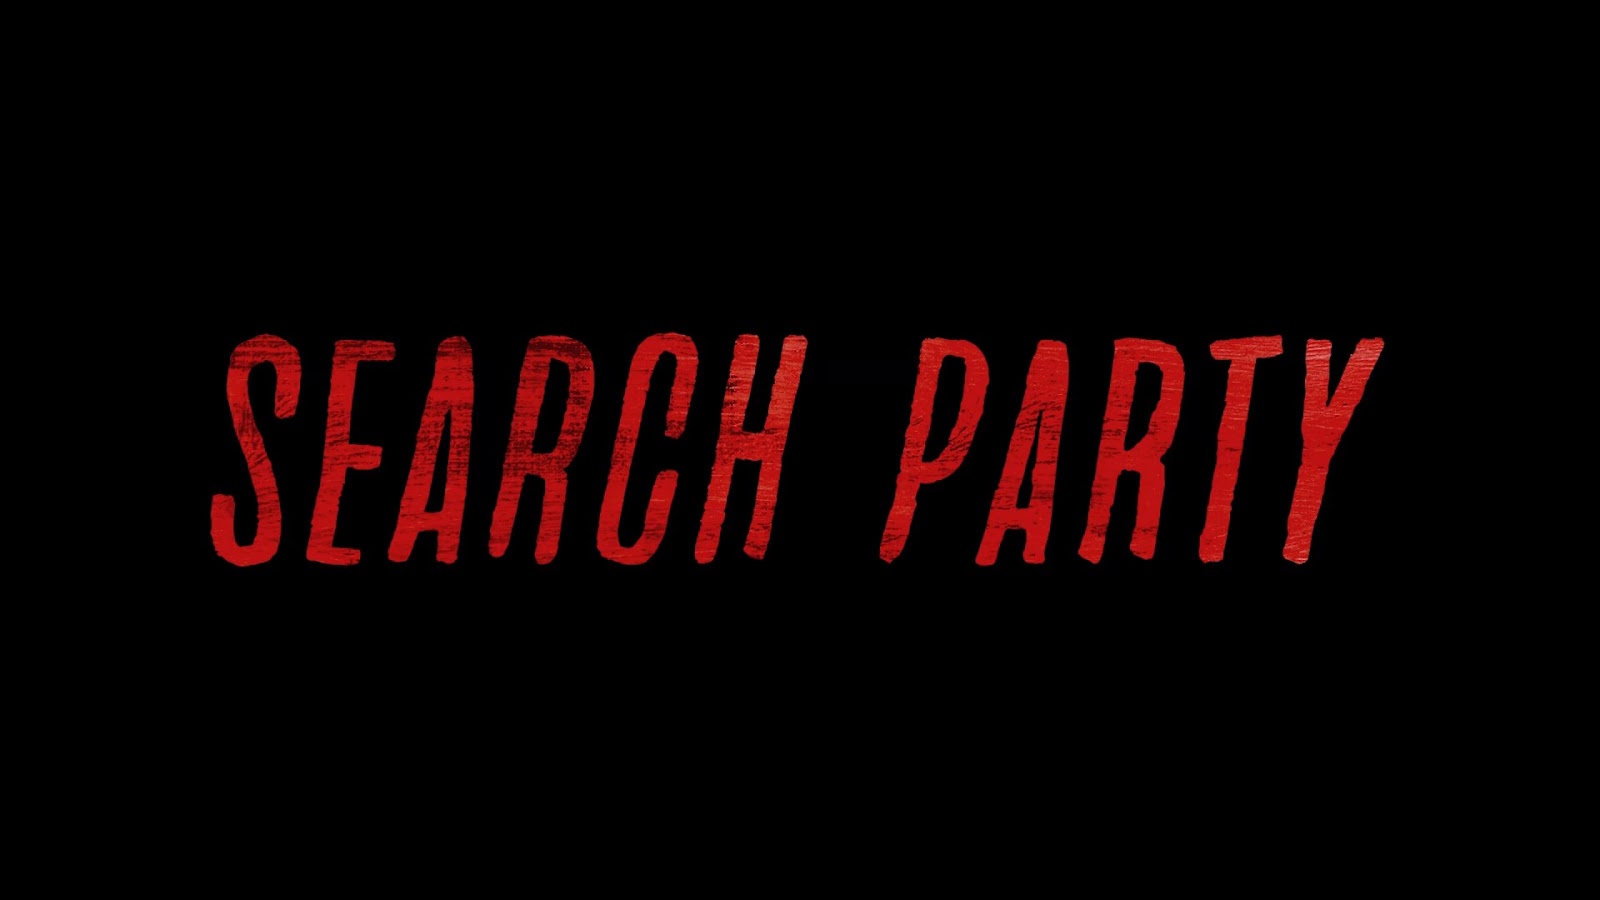 Search Party Temporada 2 (2017) 1080p WEB-DL Latino